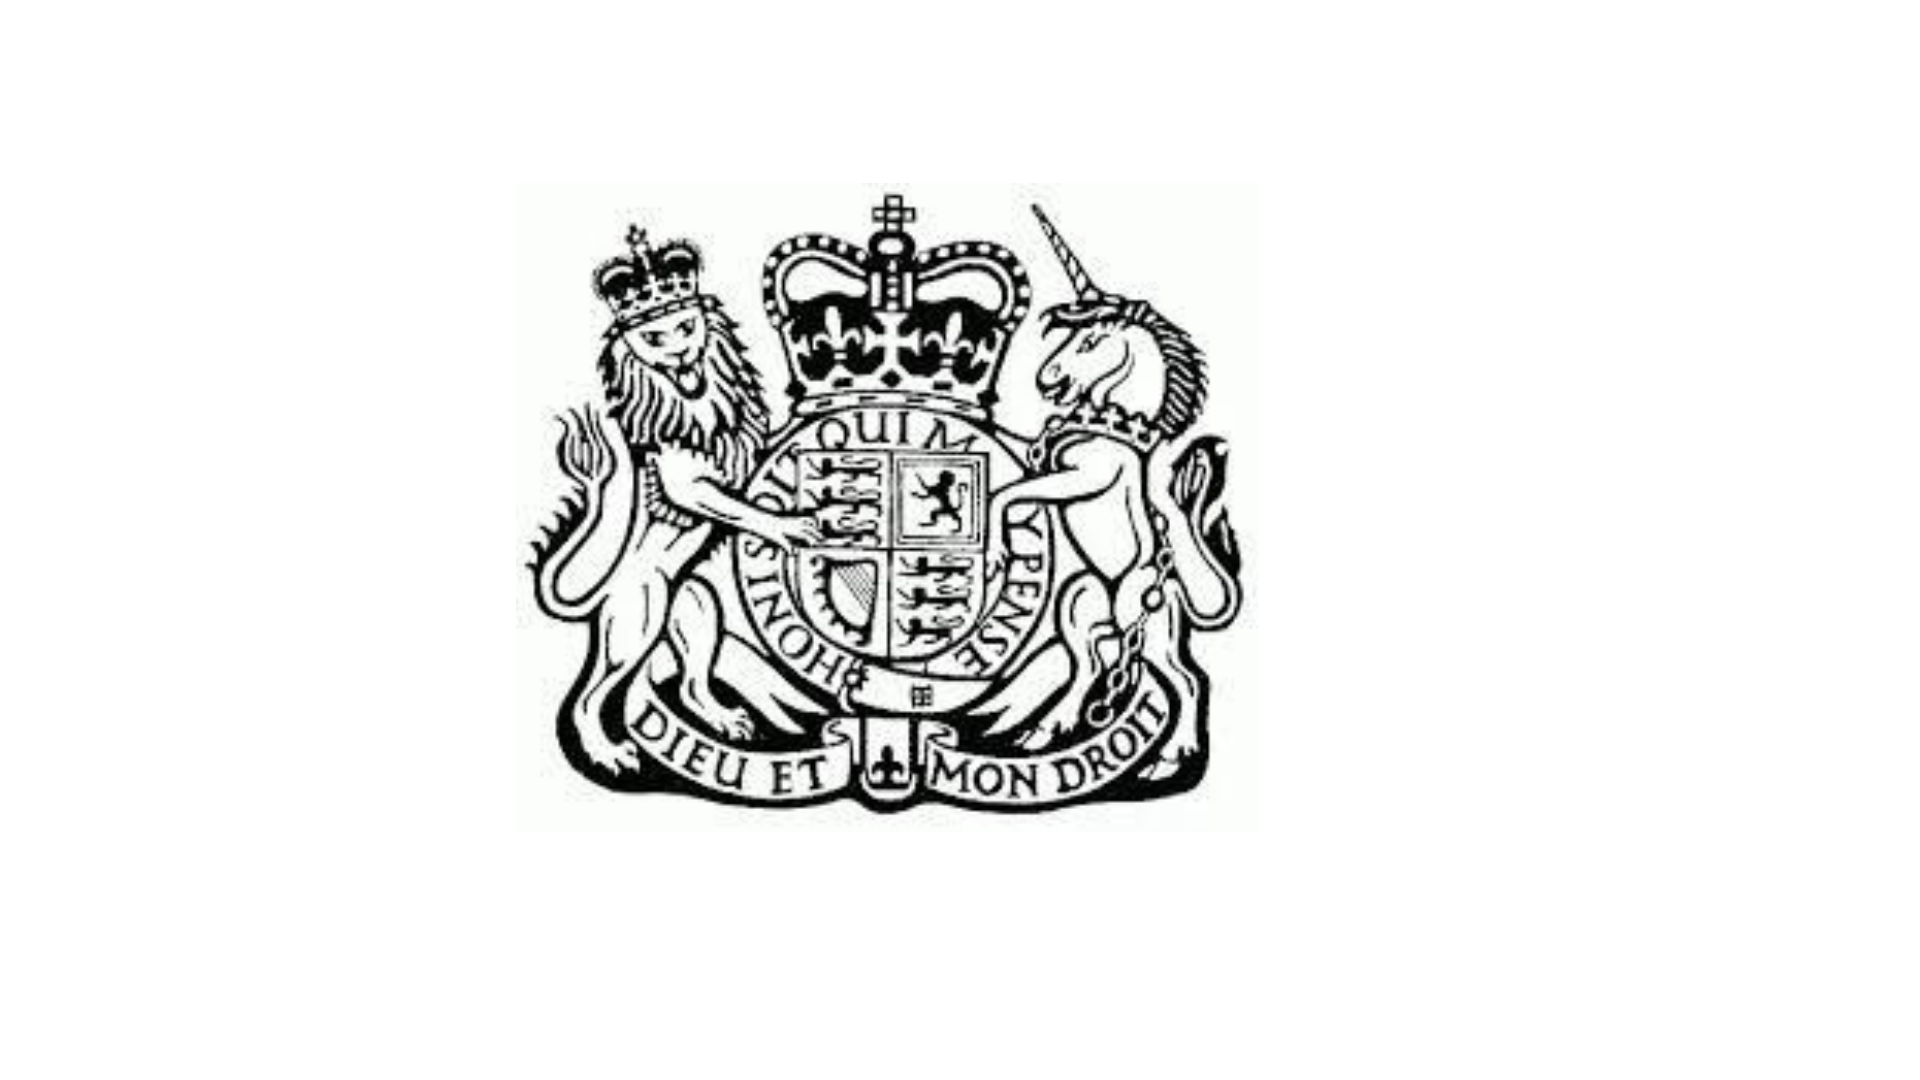 United Kingdom royal crest in black on a white background